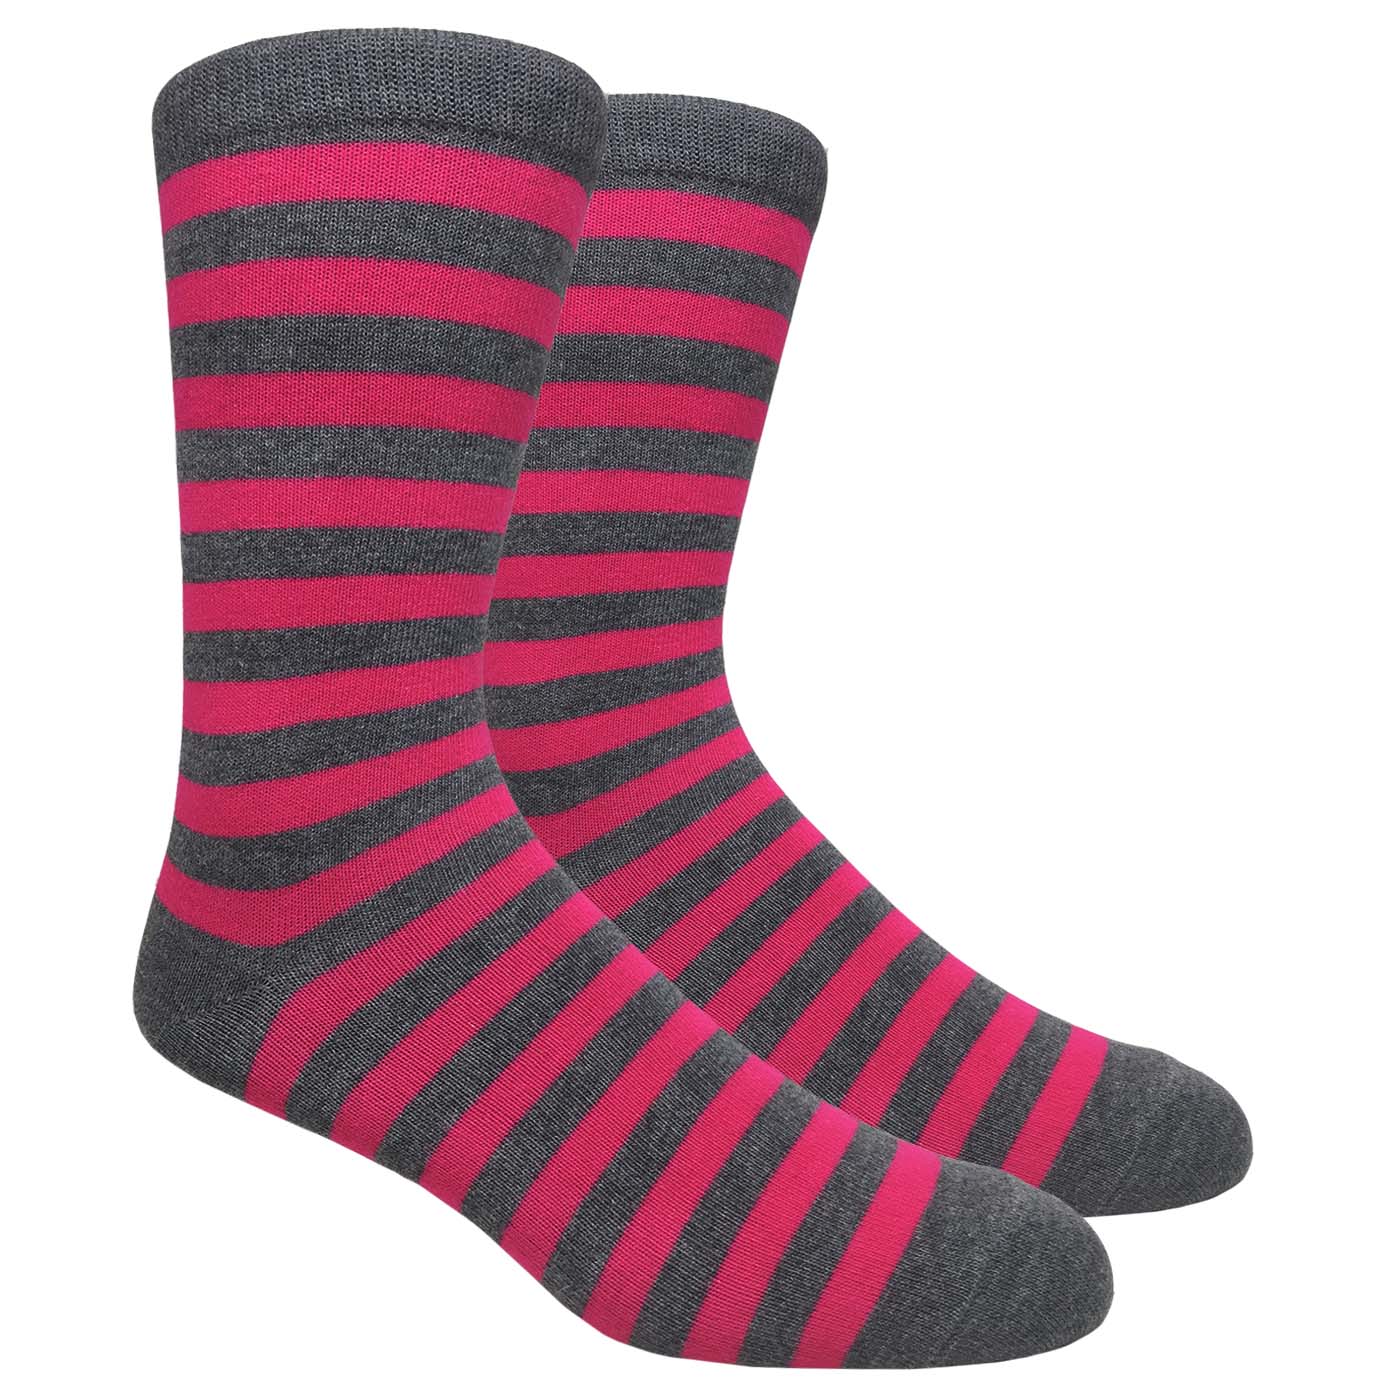 FineFit Black Label Stripe Socks - Charcoal Grey & Hot Pink